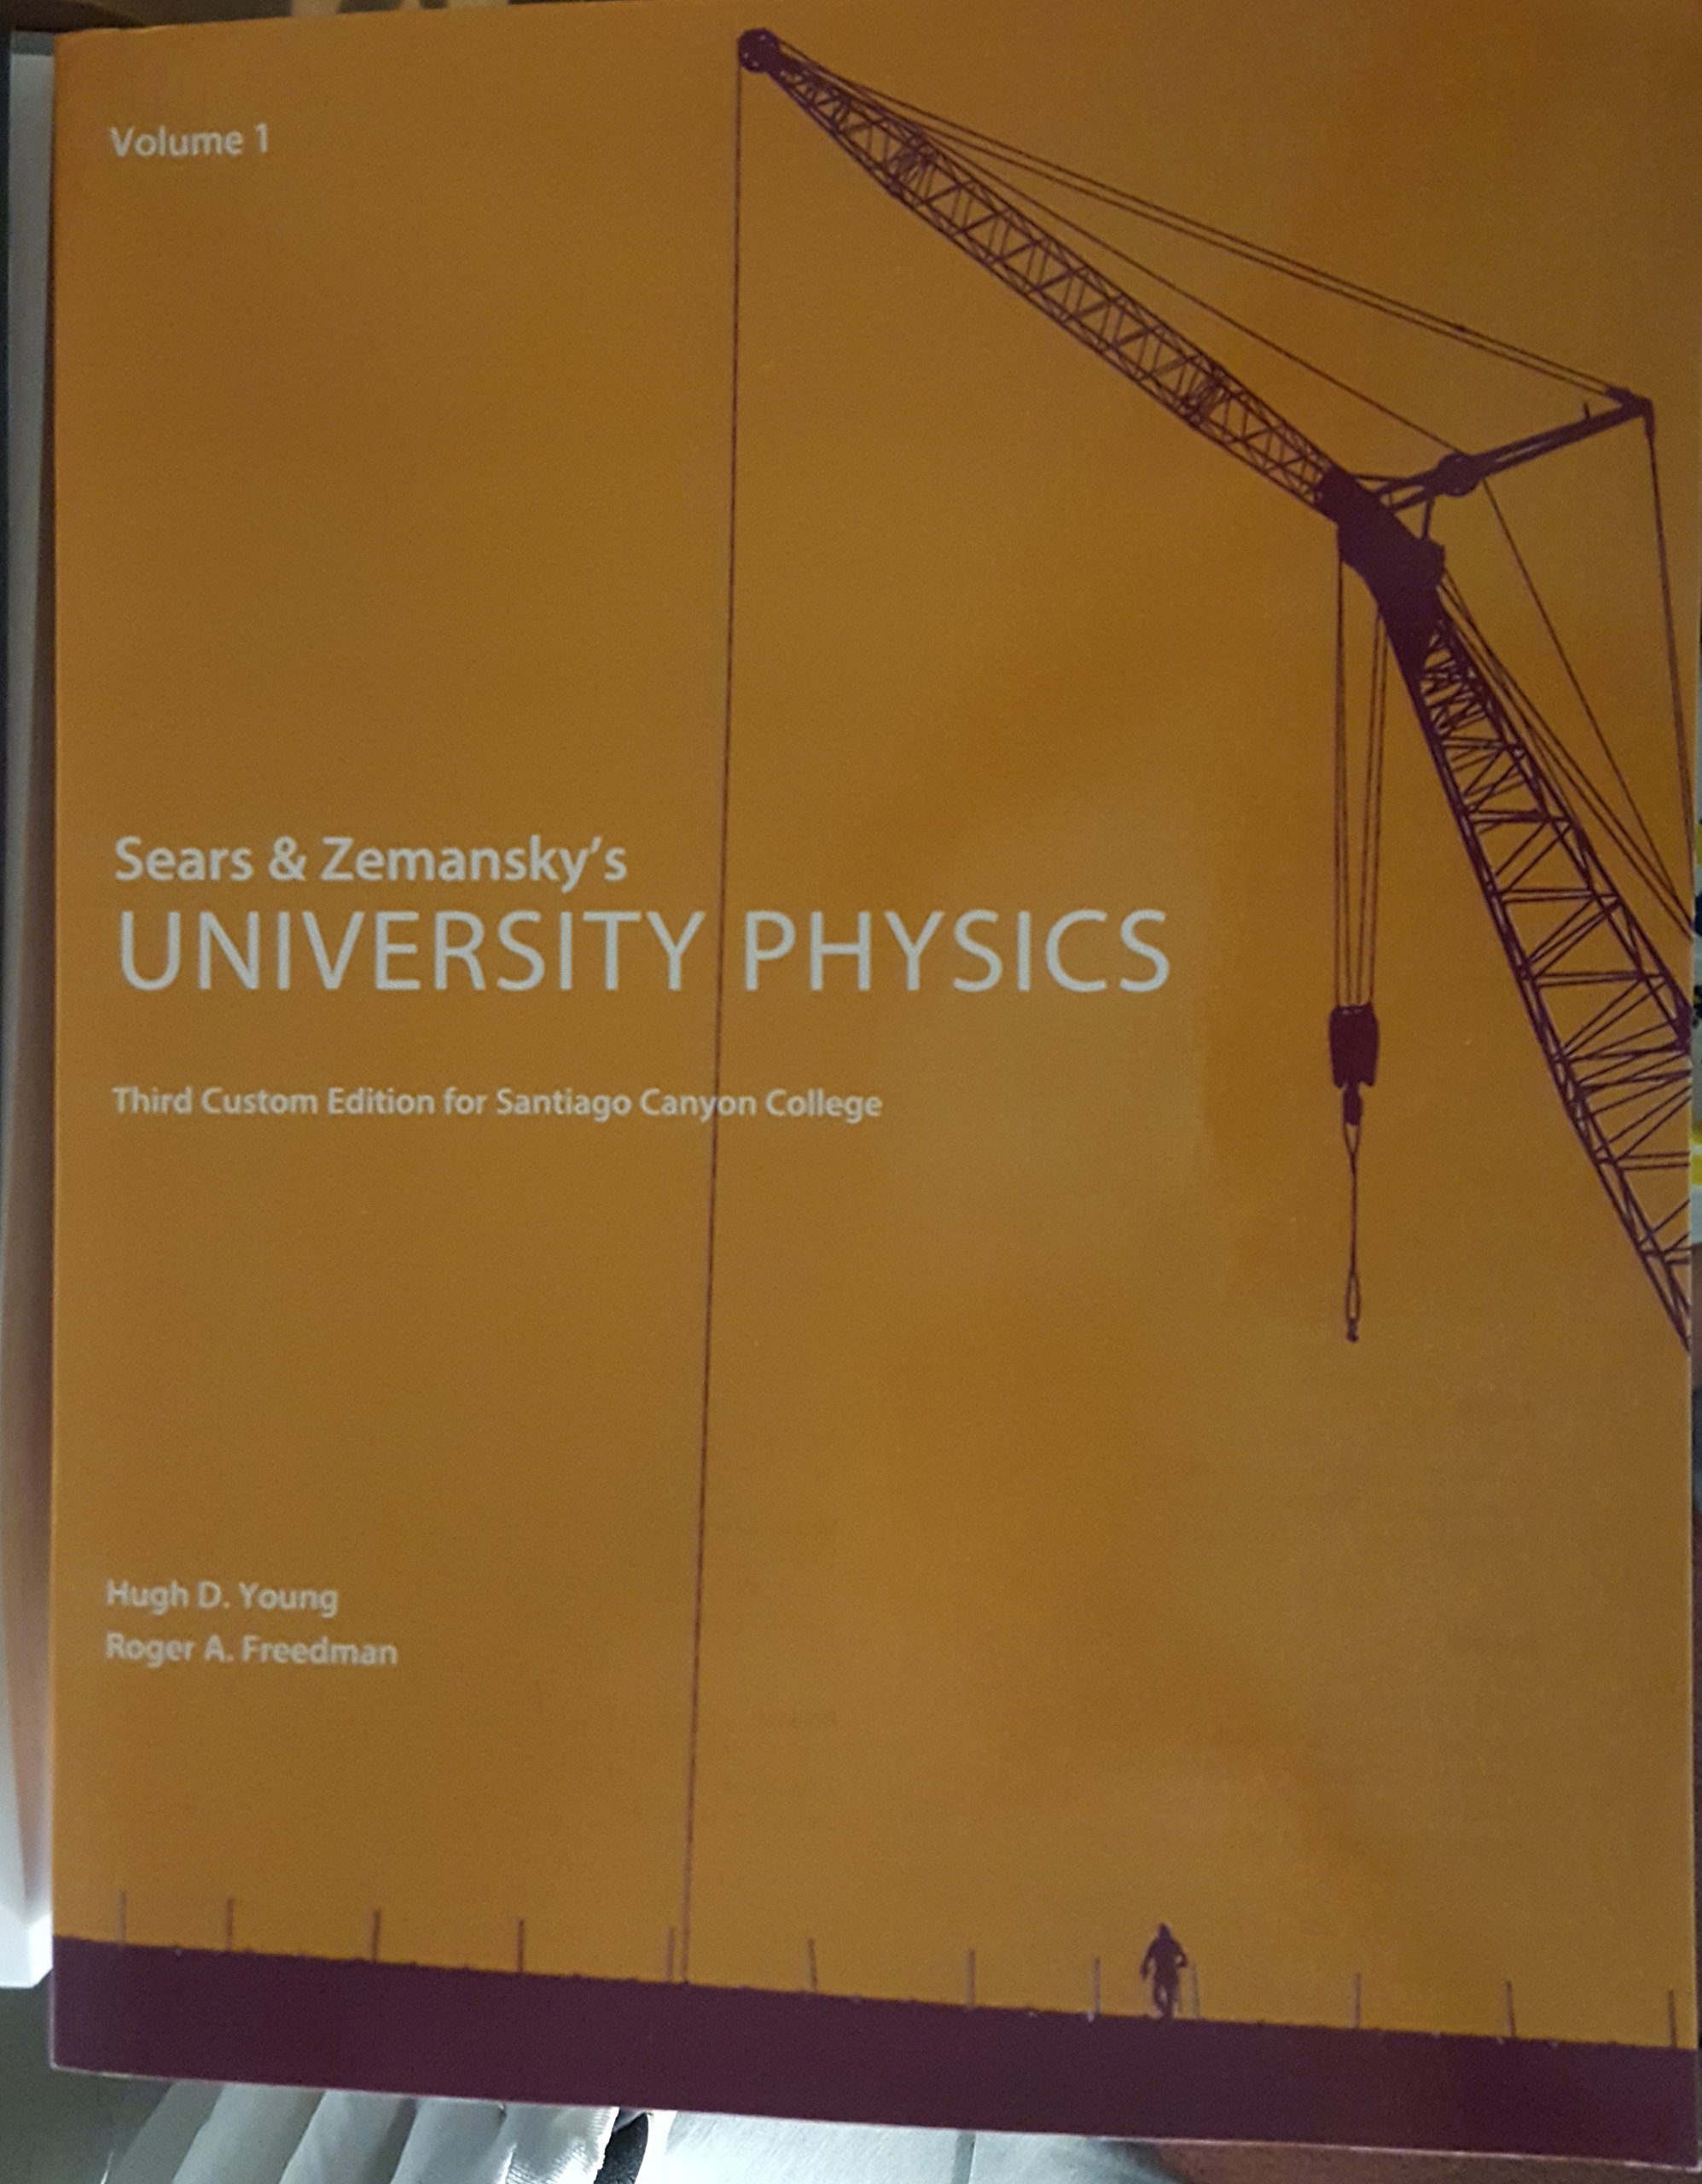 sears & zemansky's university physics vol1 - Picture 1 of 1